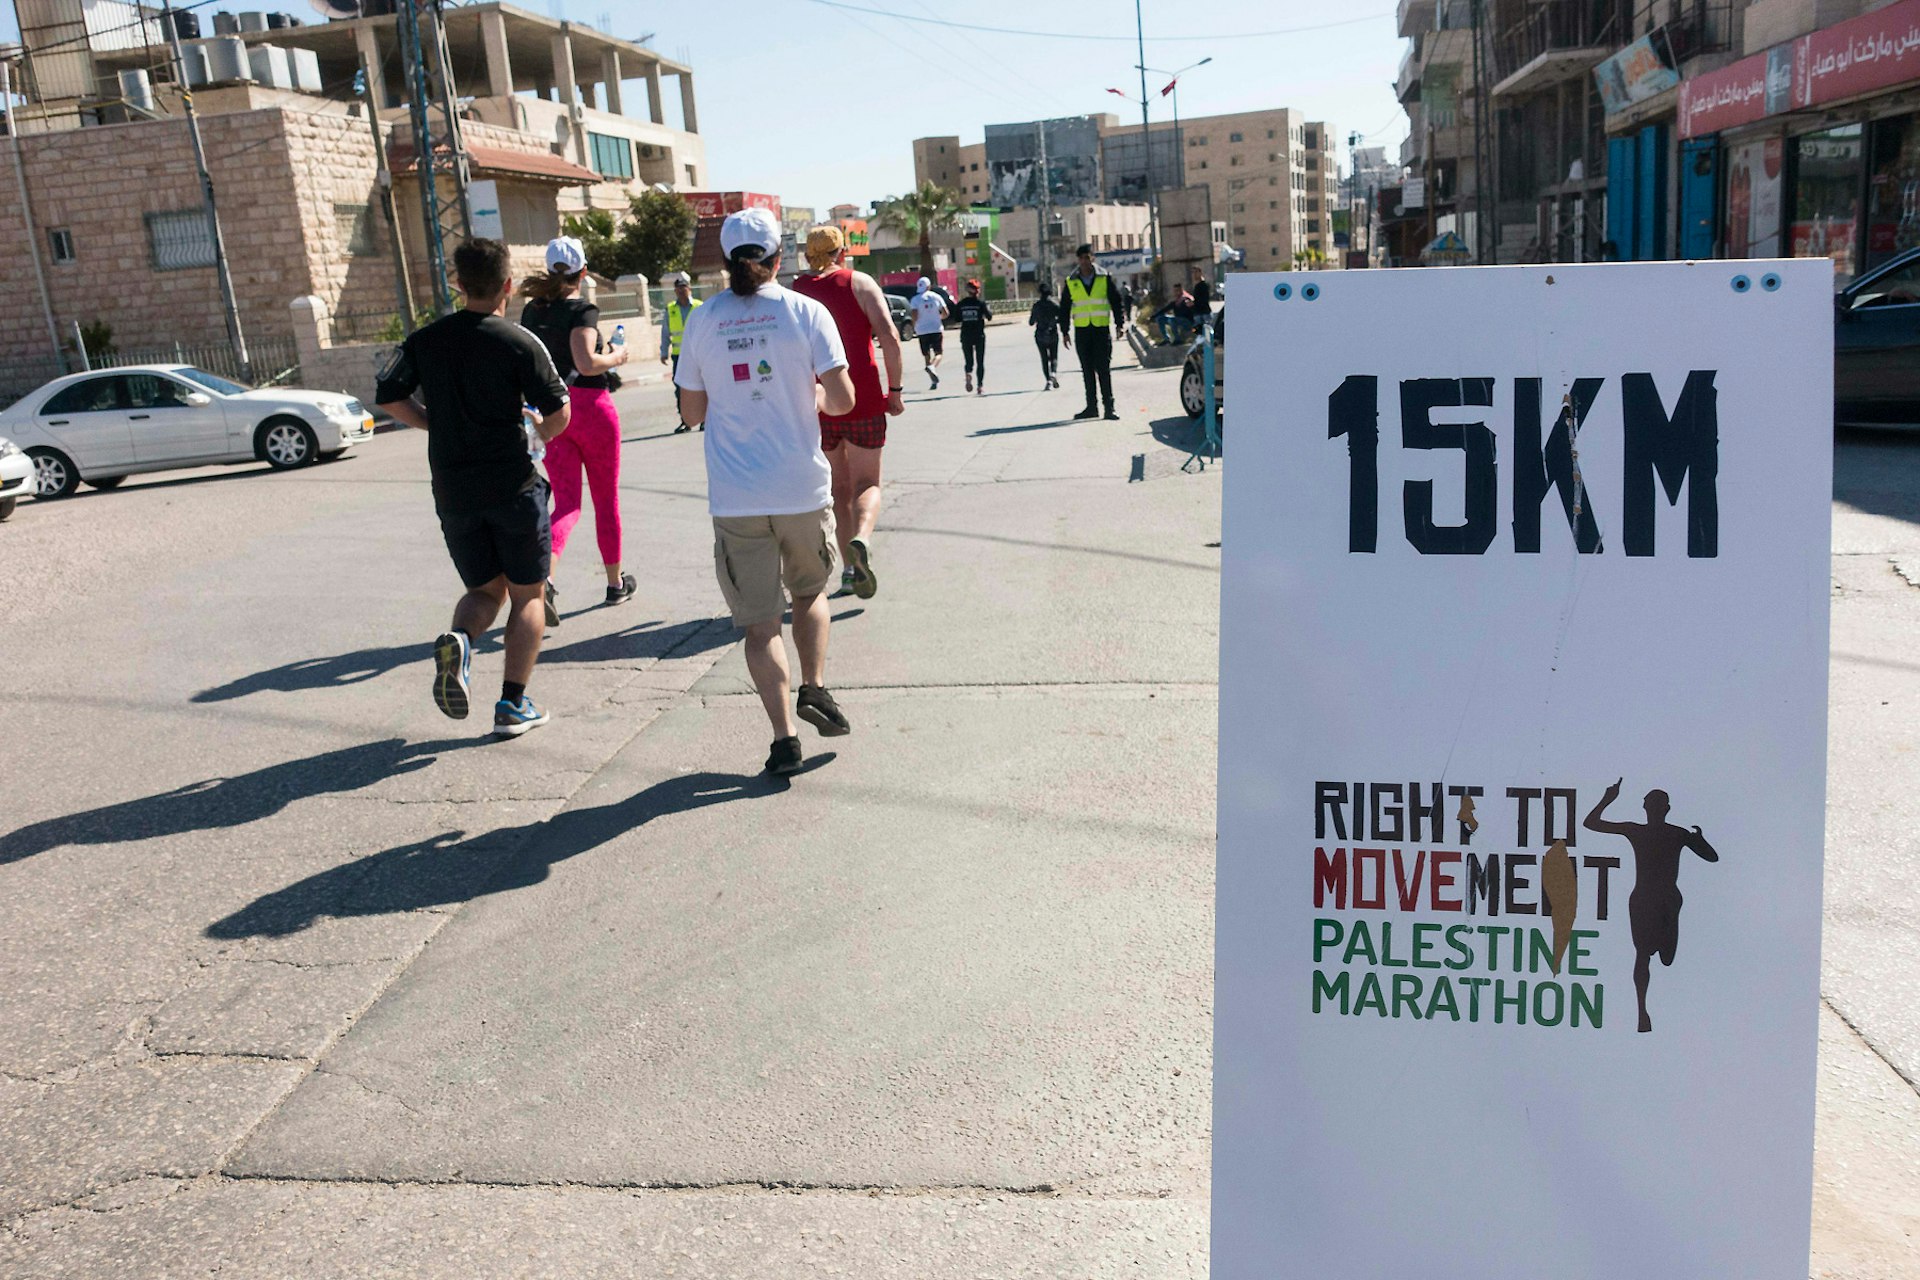 15km marker during the Right to Movement, Palestine Marathon 2016